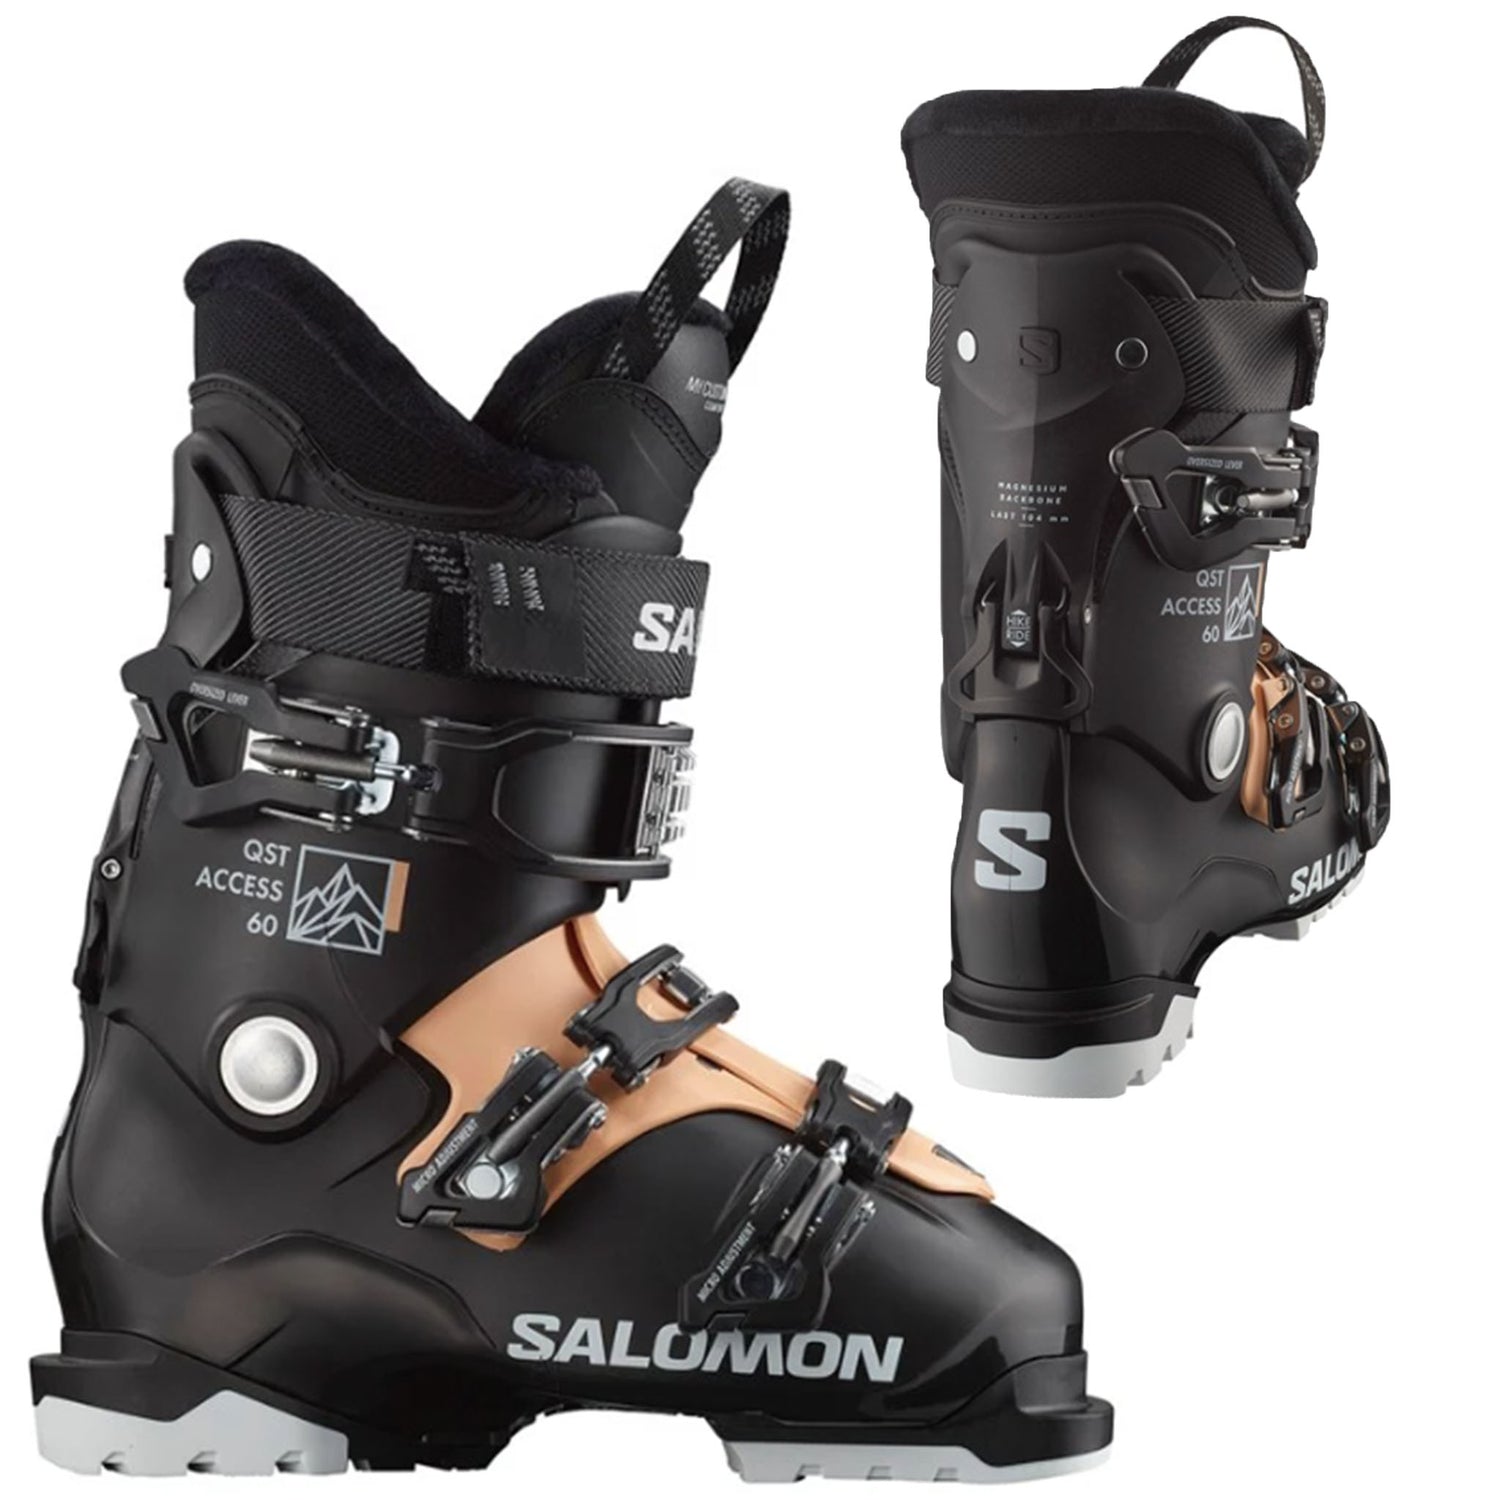 Salomon Women's QST Access 60 Alpine Ski Boots